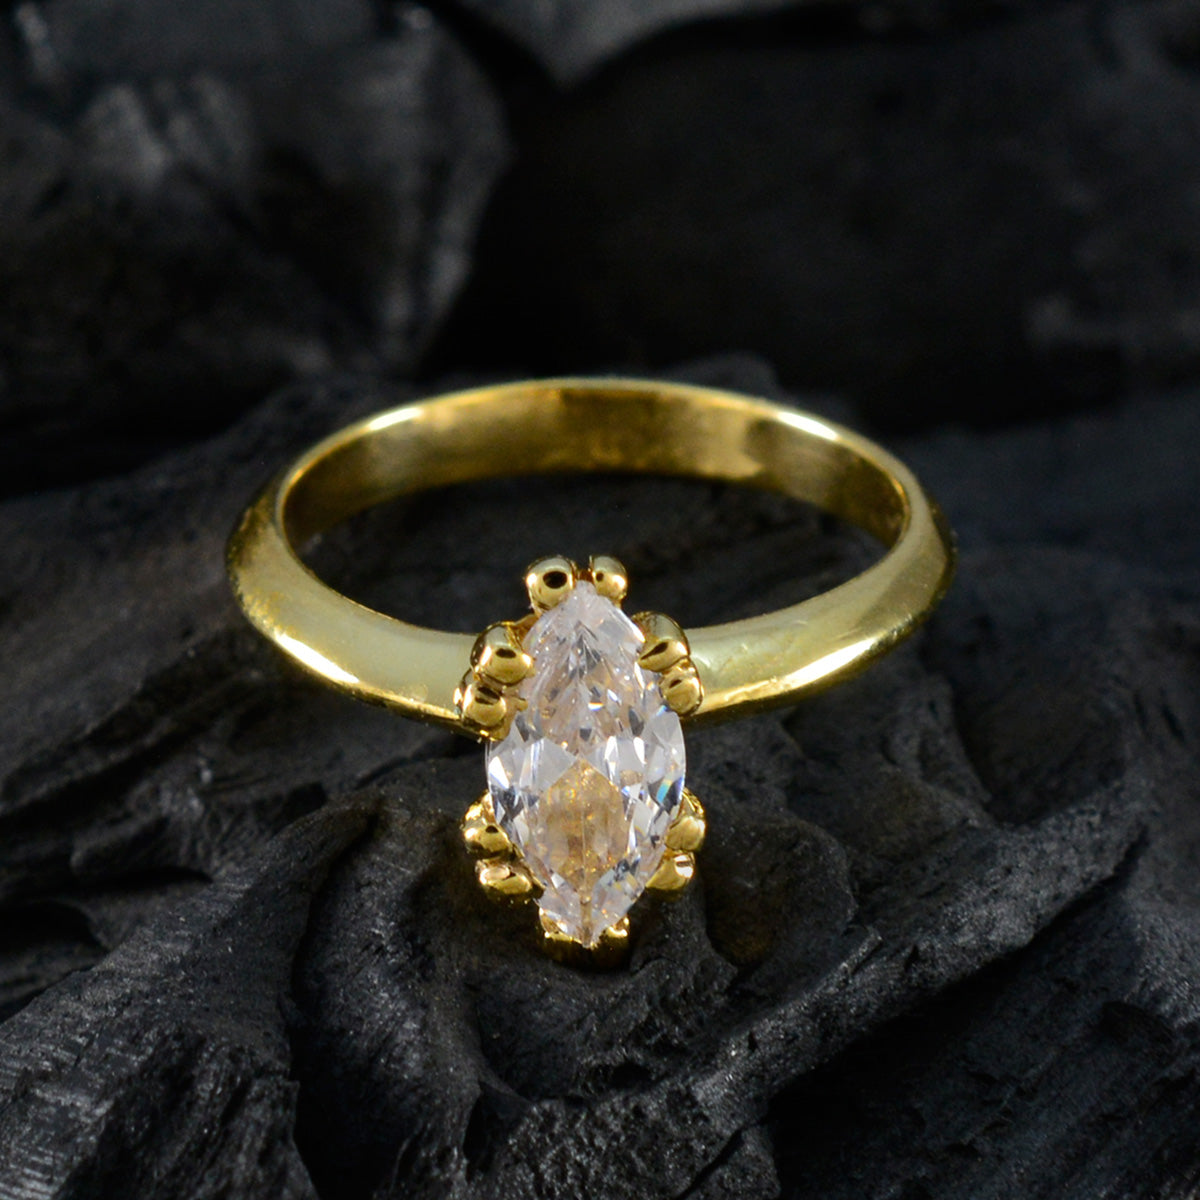 Riyo Uitstekende zilveren ring met geelgouden witte CZ-steen Marquise vorm Prong Setting Ring